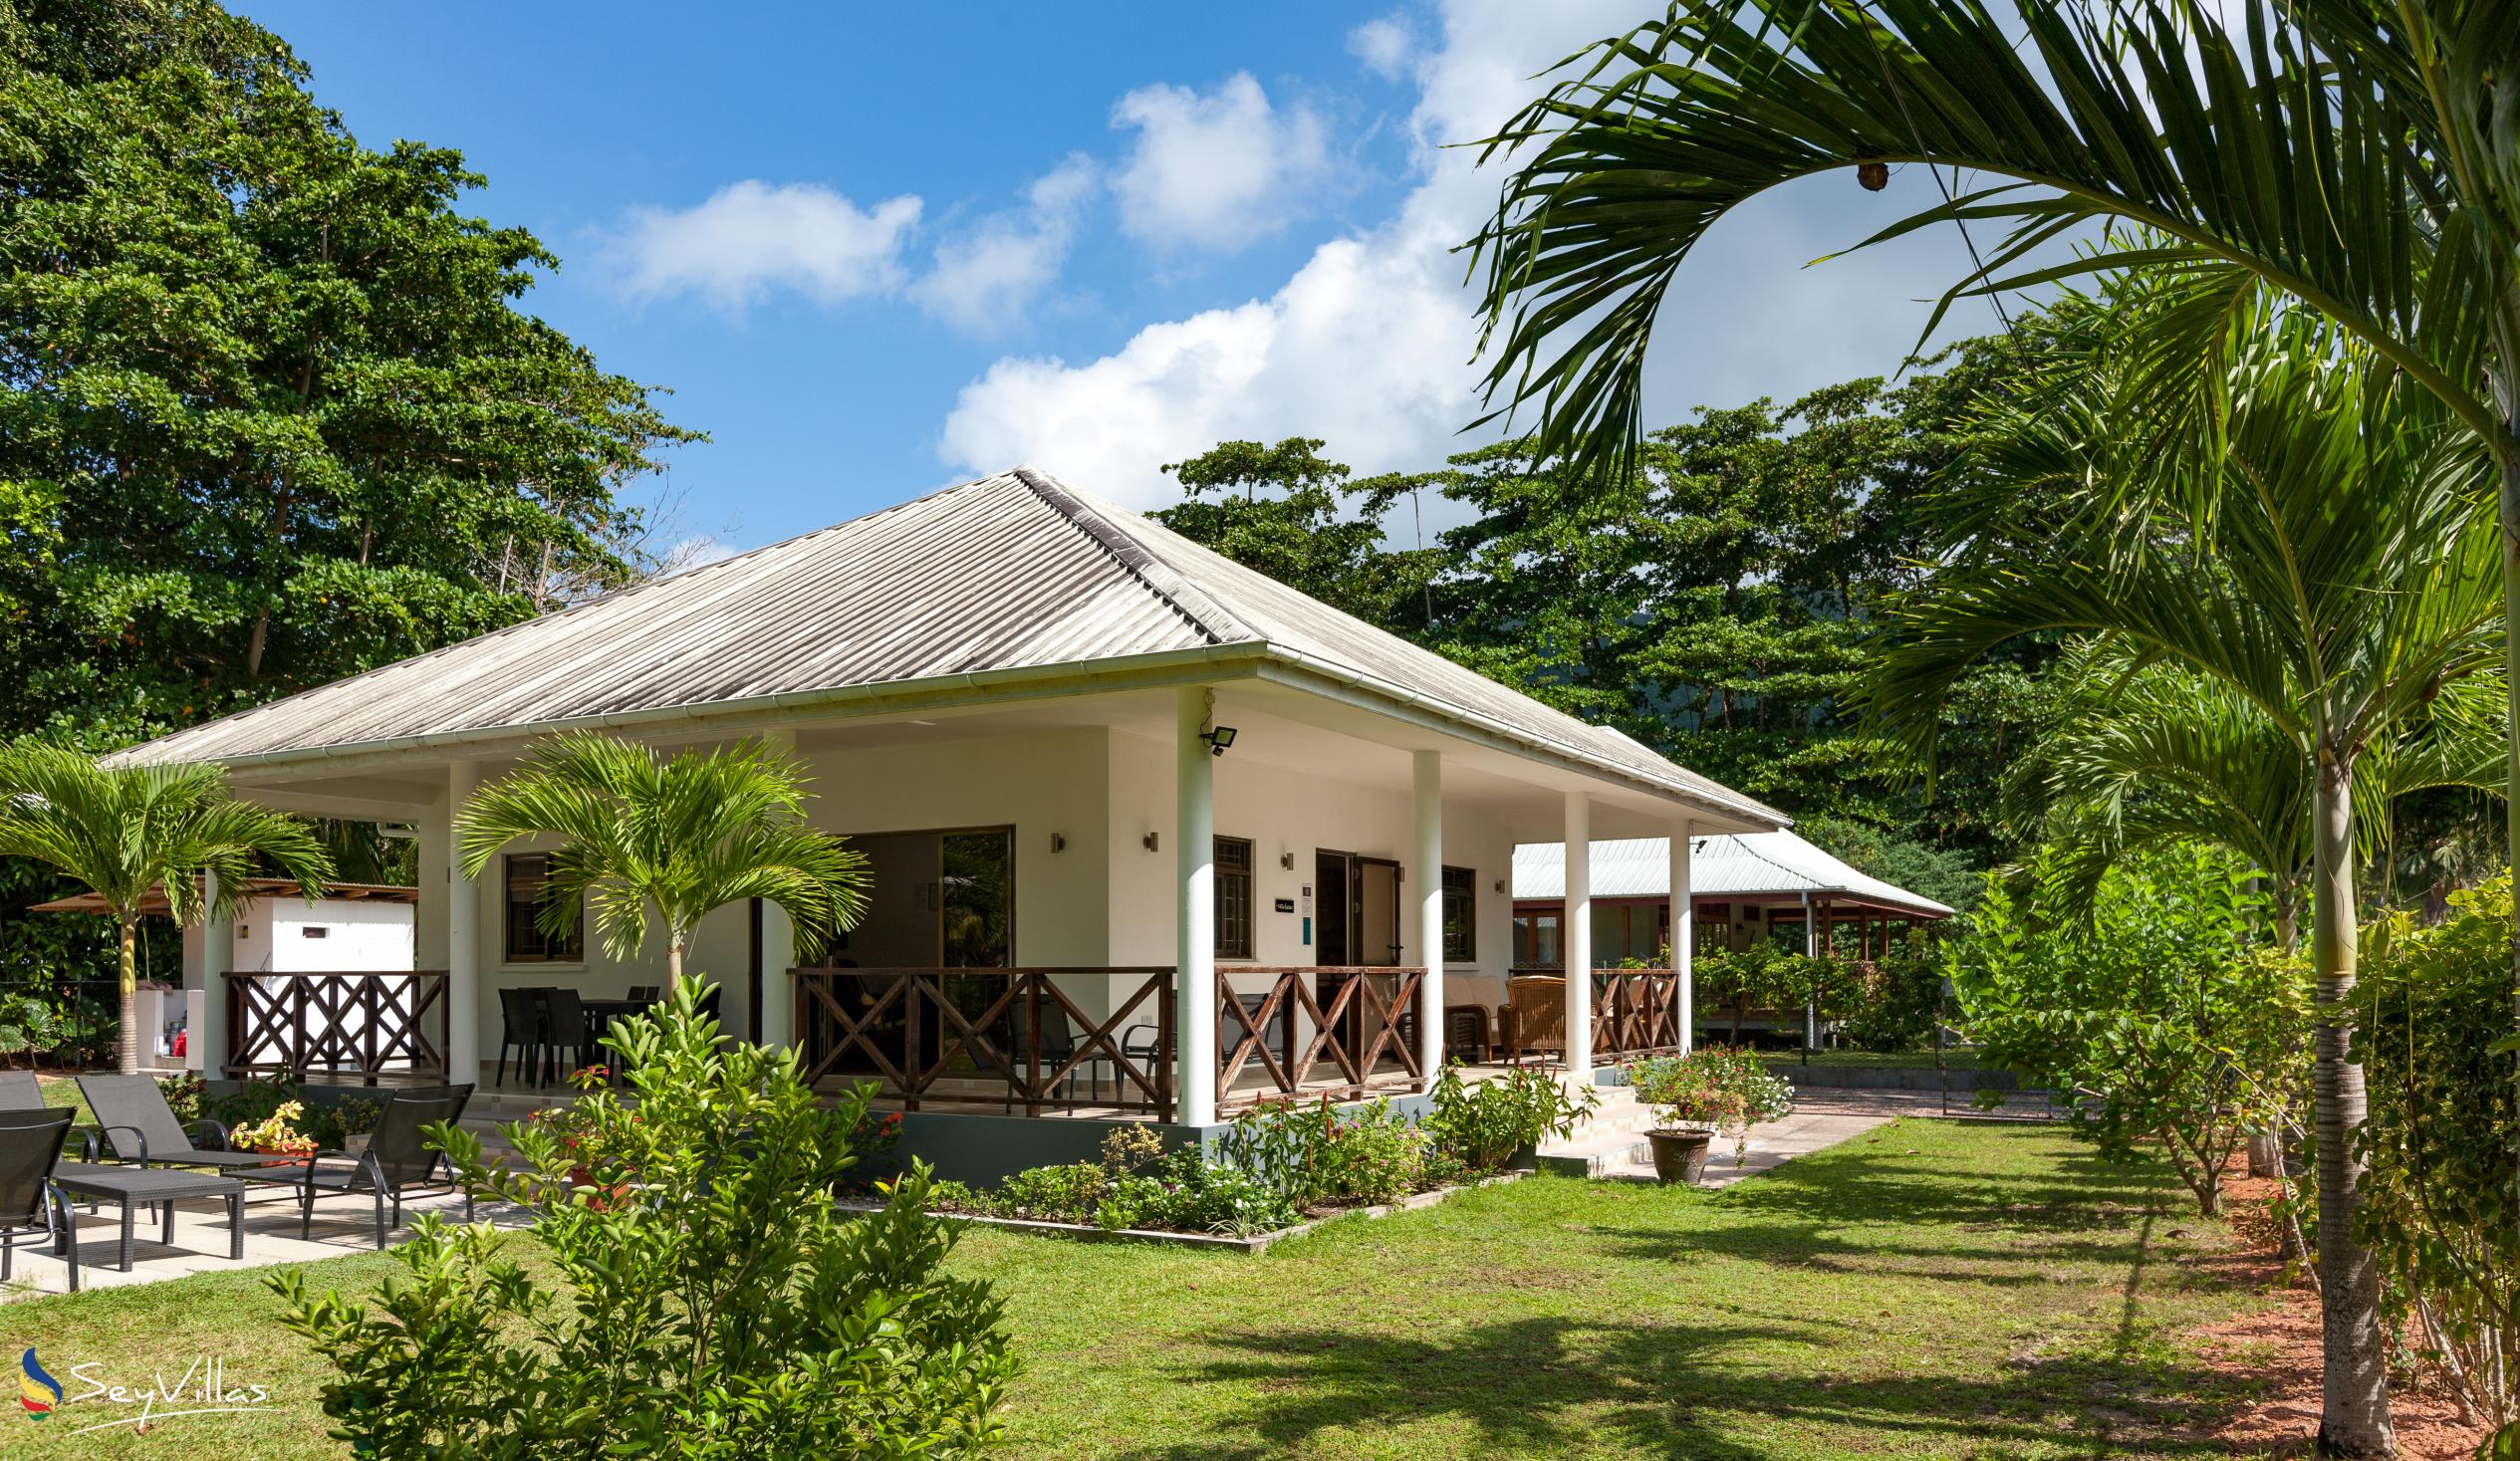 Foto 12: Villa Laure - Villa Laure - Praslin (Seychellen)